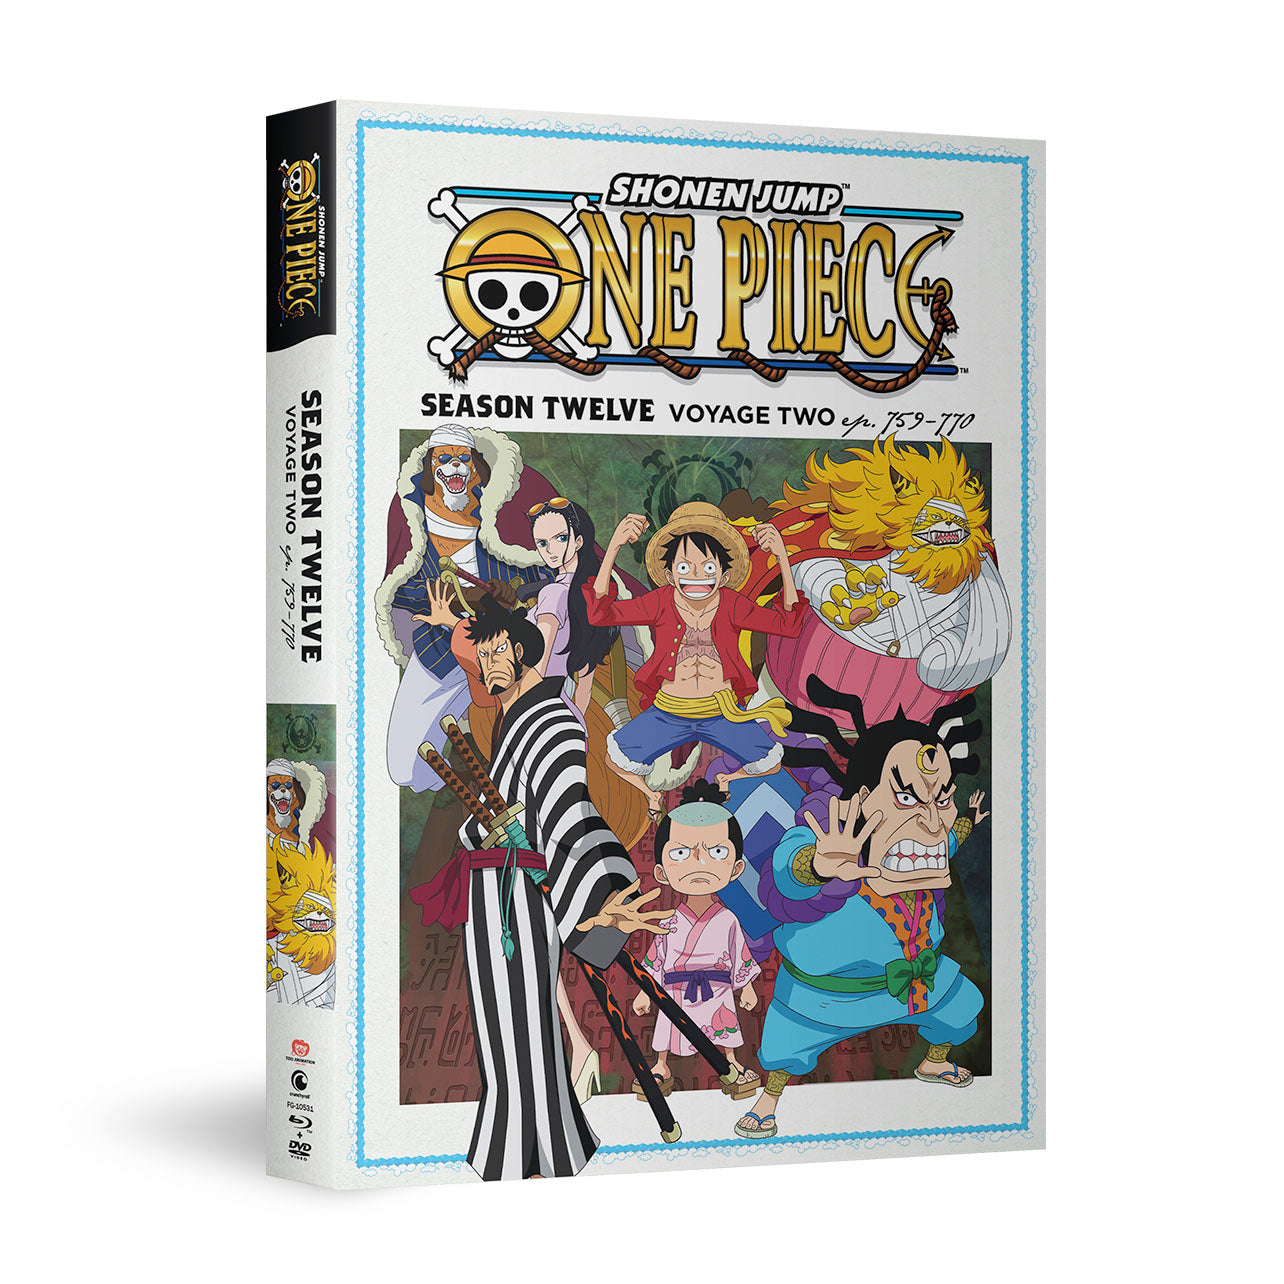 One Piece - Season 12 Voyage 2 - Bd/Dvd | Crunchyroll Store